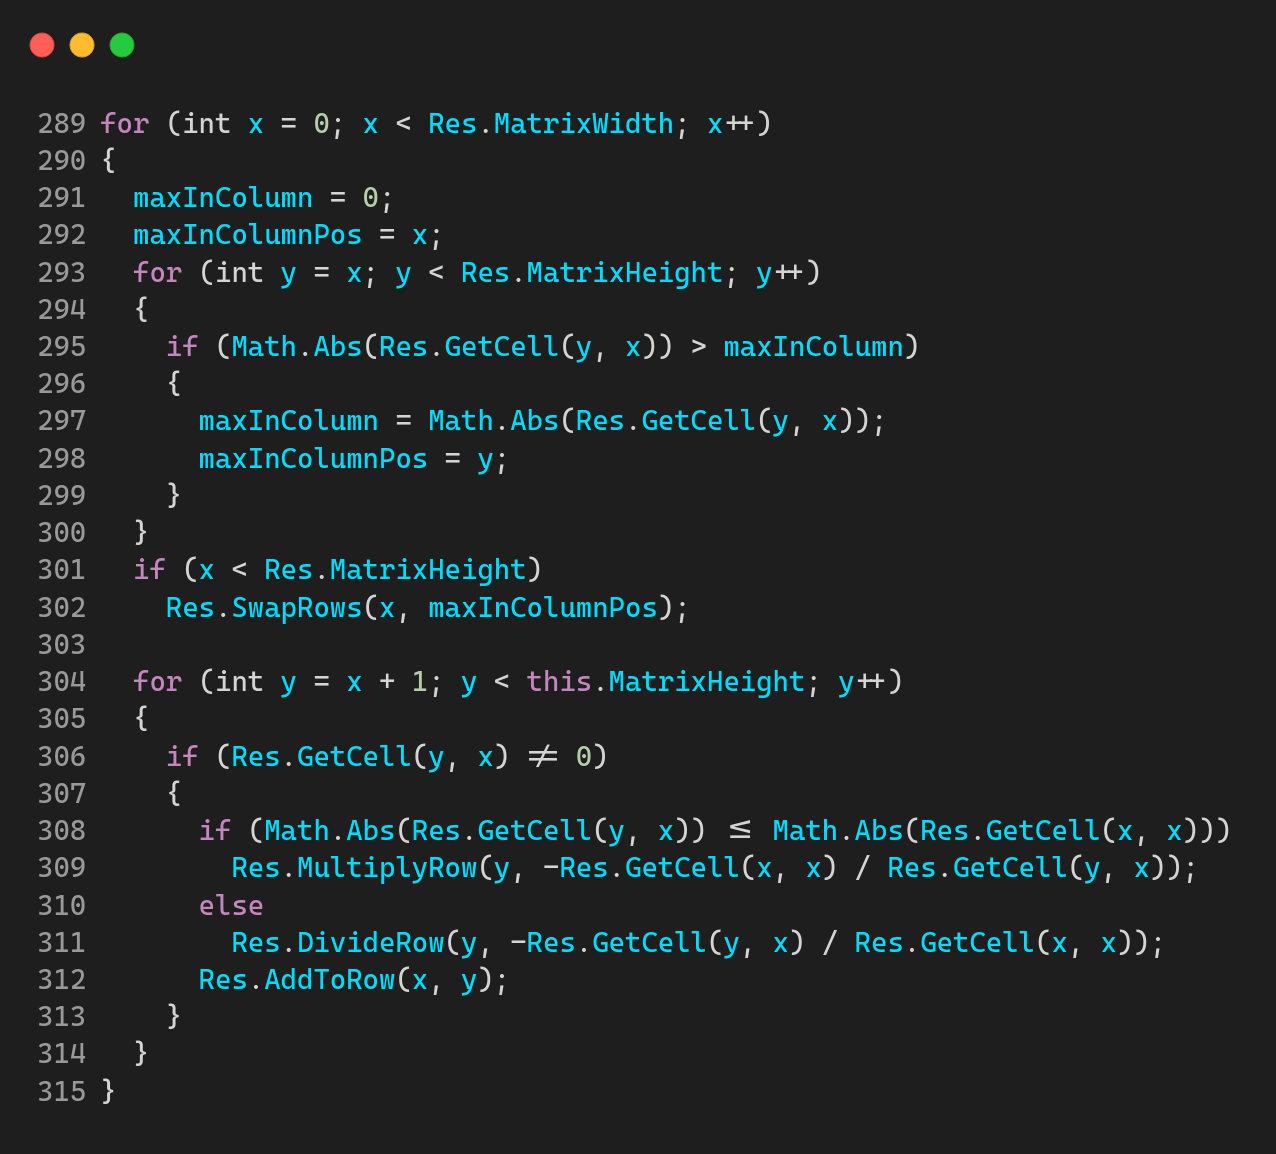 Screenshot of a part of code converting a matrix into reduced row echelon form using Gauss-Jordan elimination